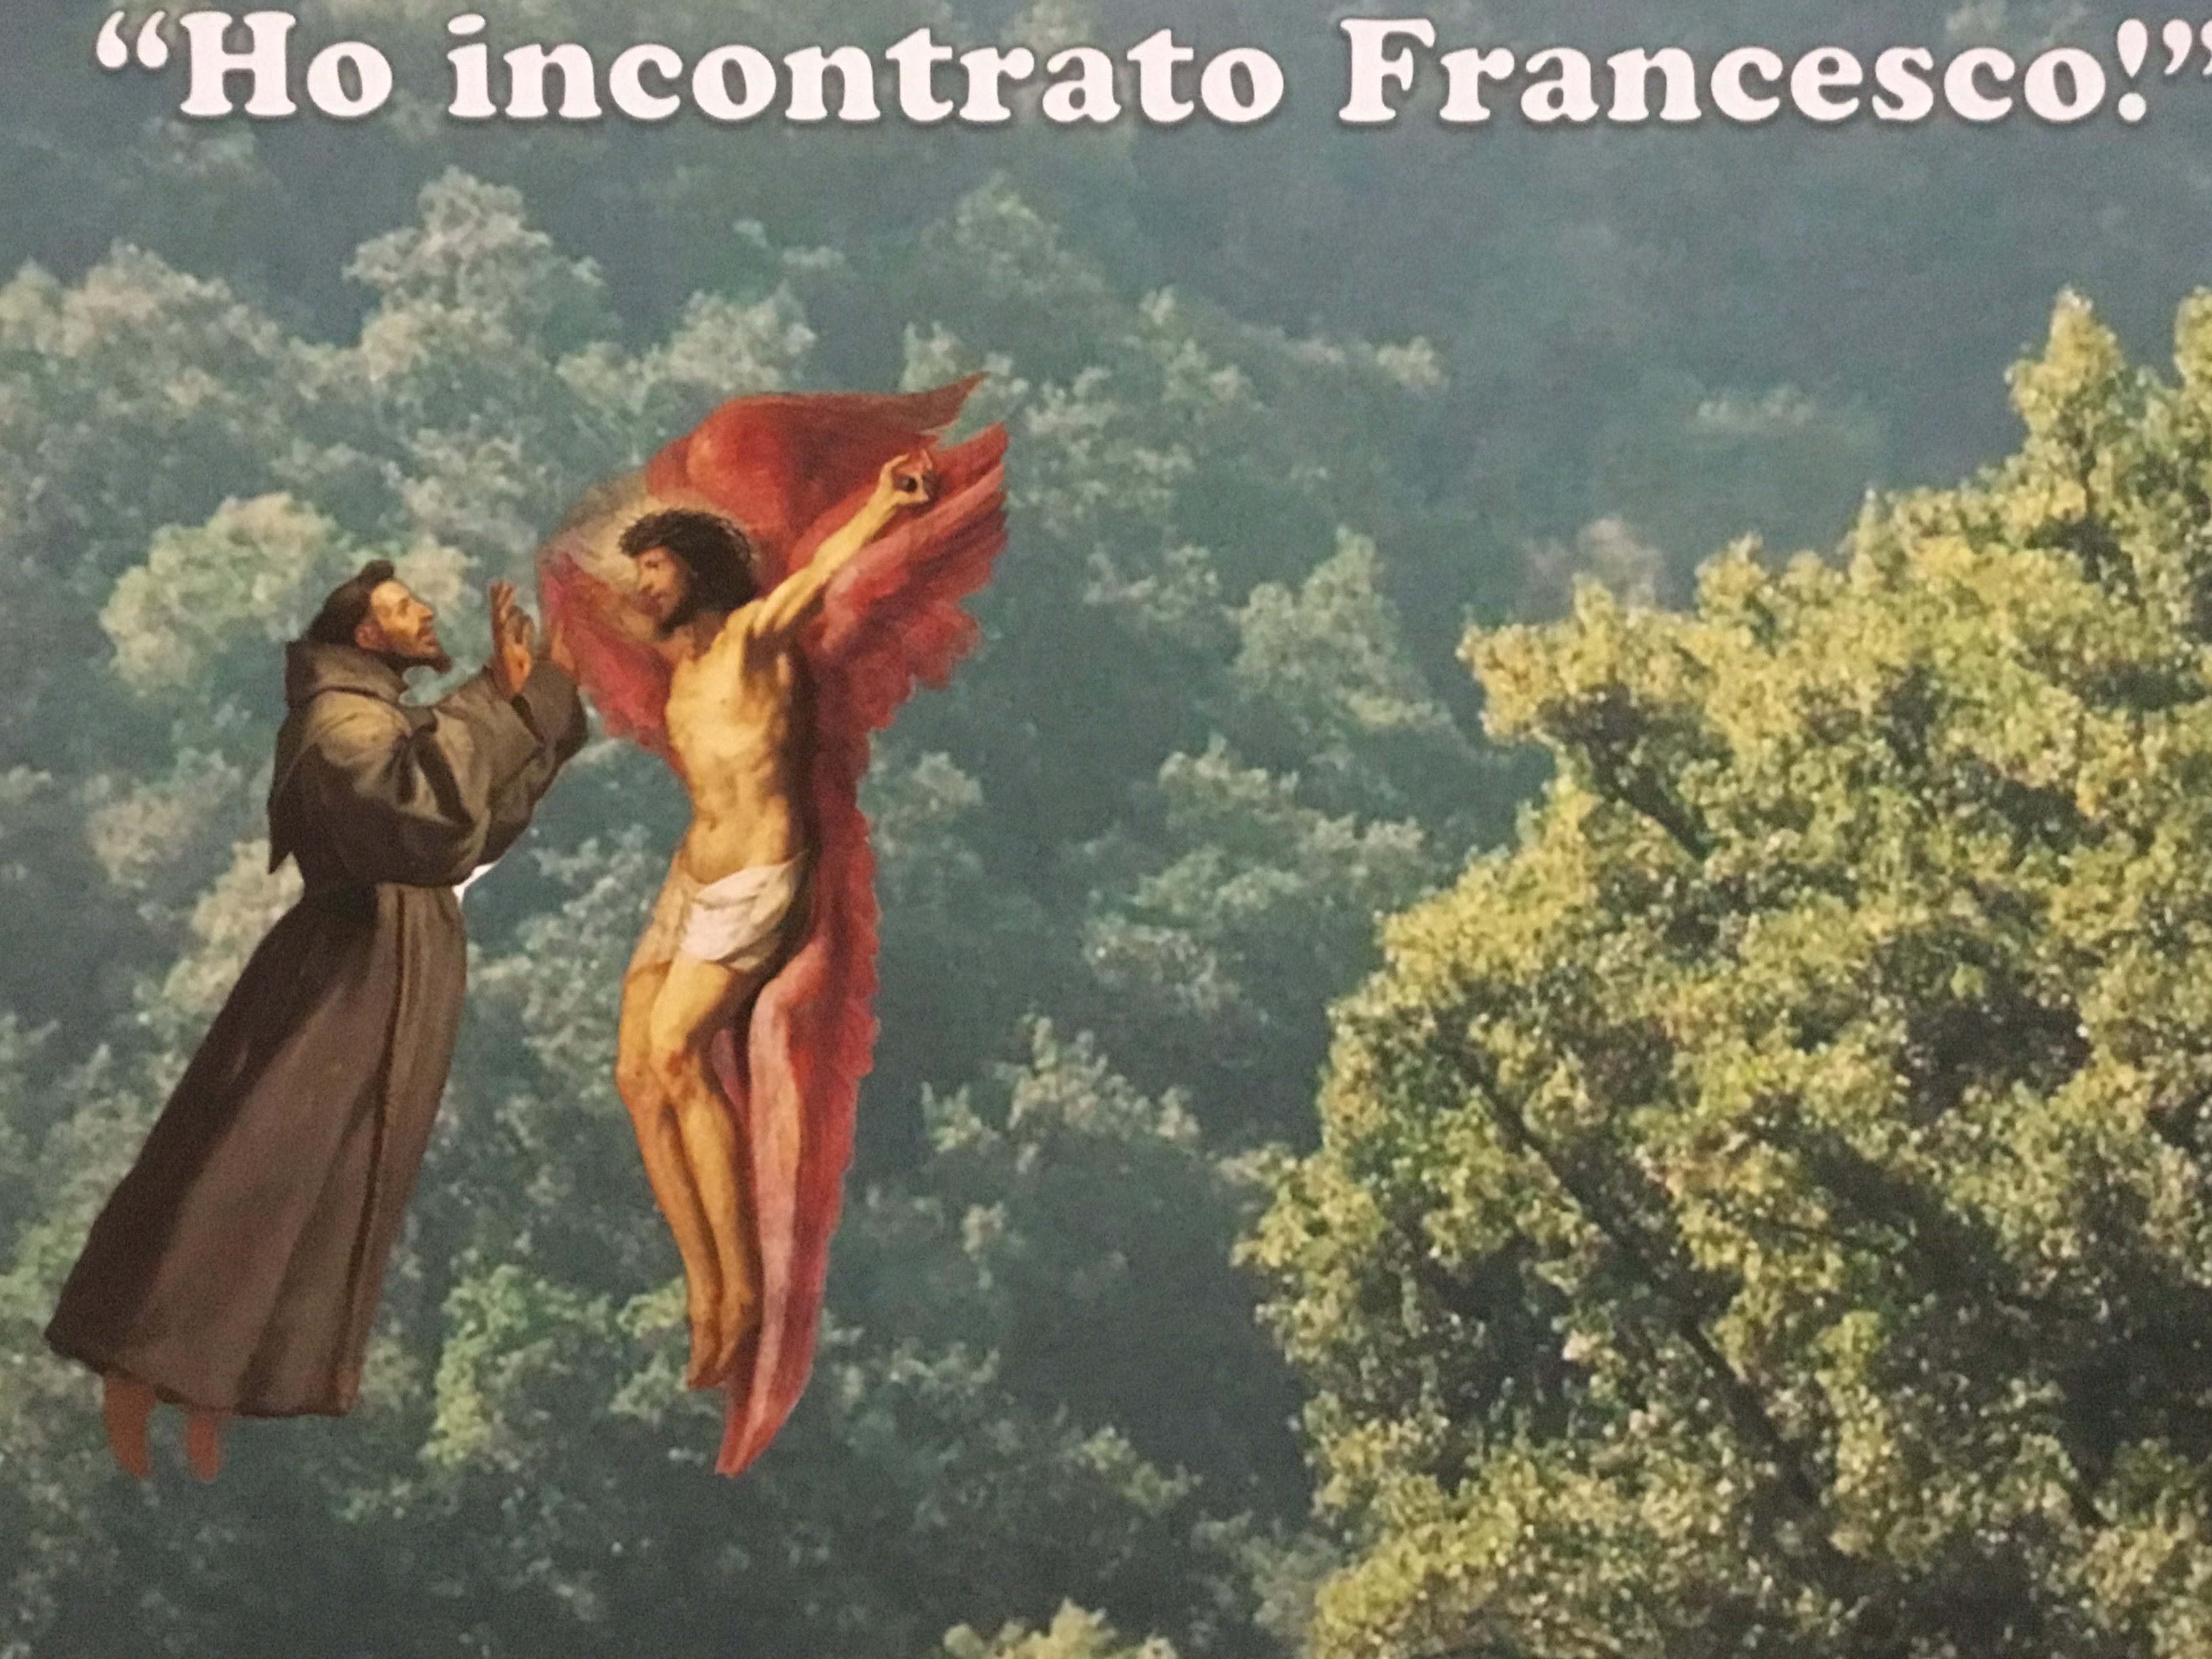 Francesco d’Assisi per olio lampada Toscana 2019 – Foto Giornalista Franco Mariani (1)